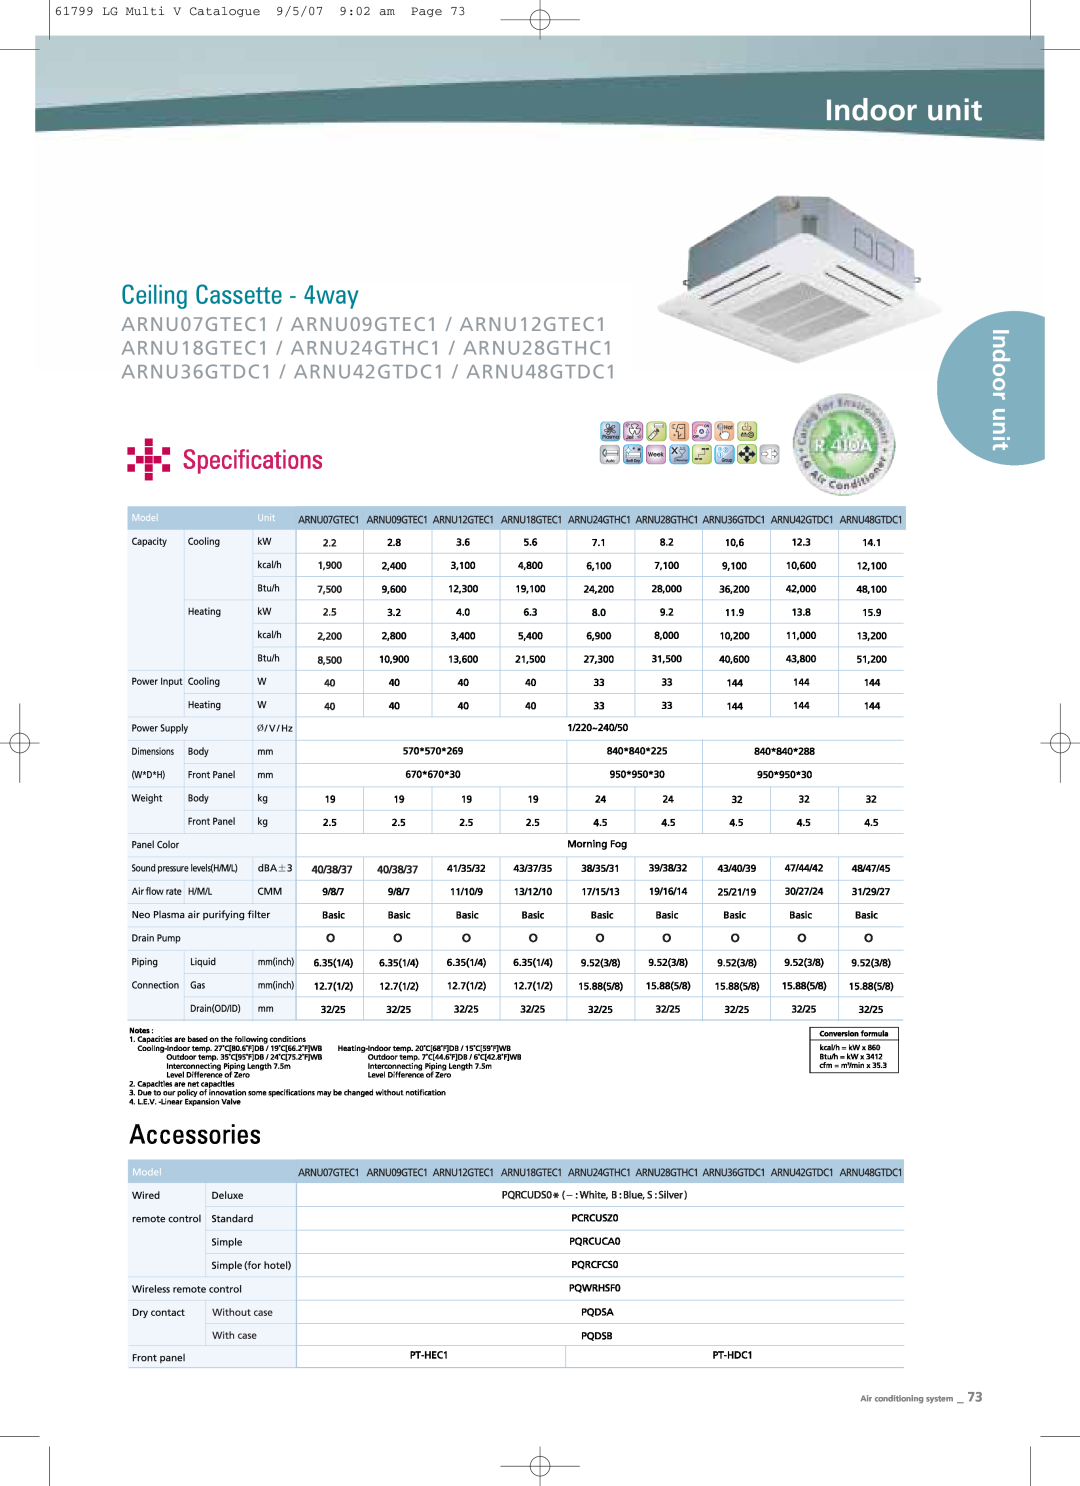 LG Electronics PRHR040 Ceiling Cassette - 4way, unit Specifications, Indoor unit, ARNU07GTEC1 / ARNU09GTEC1 / ARNU12GTEC1 